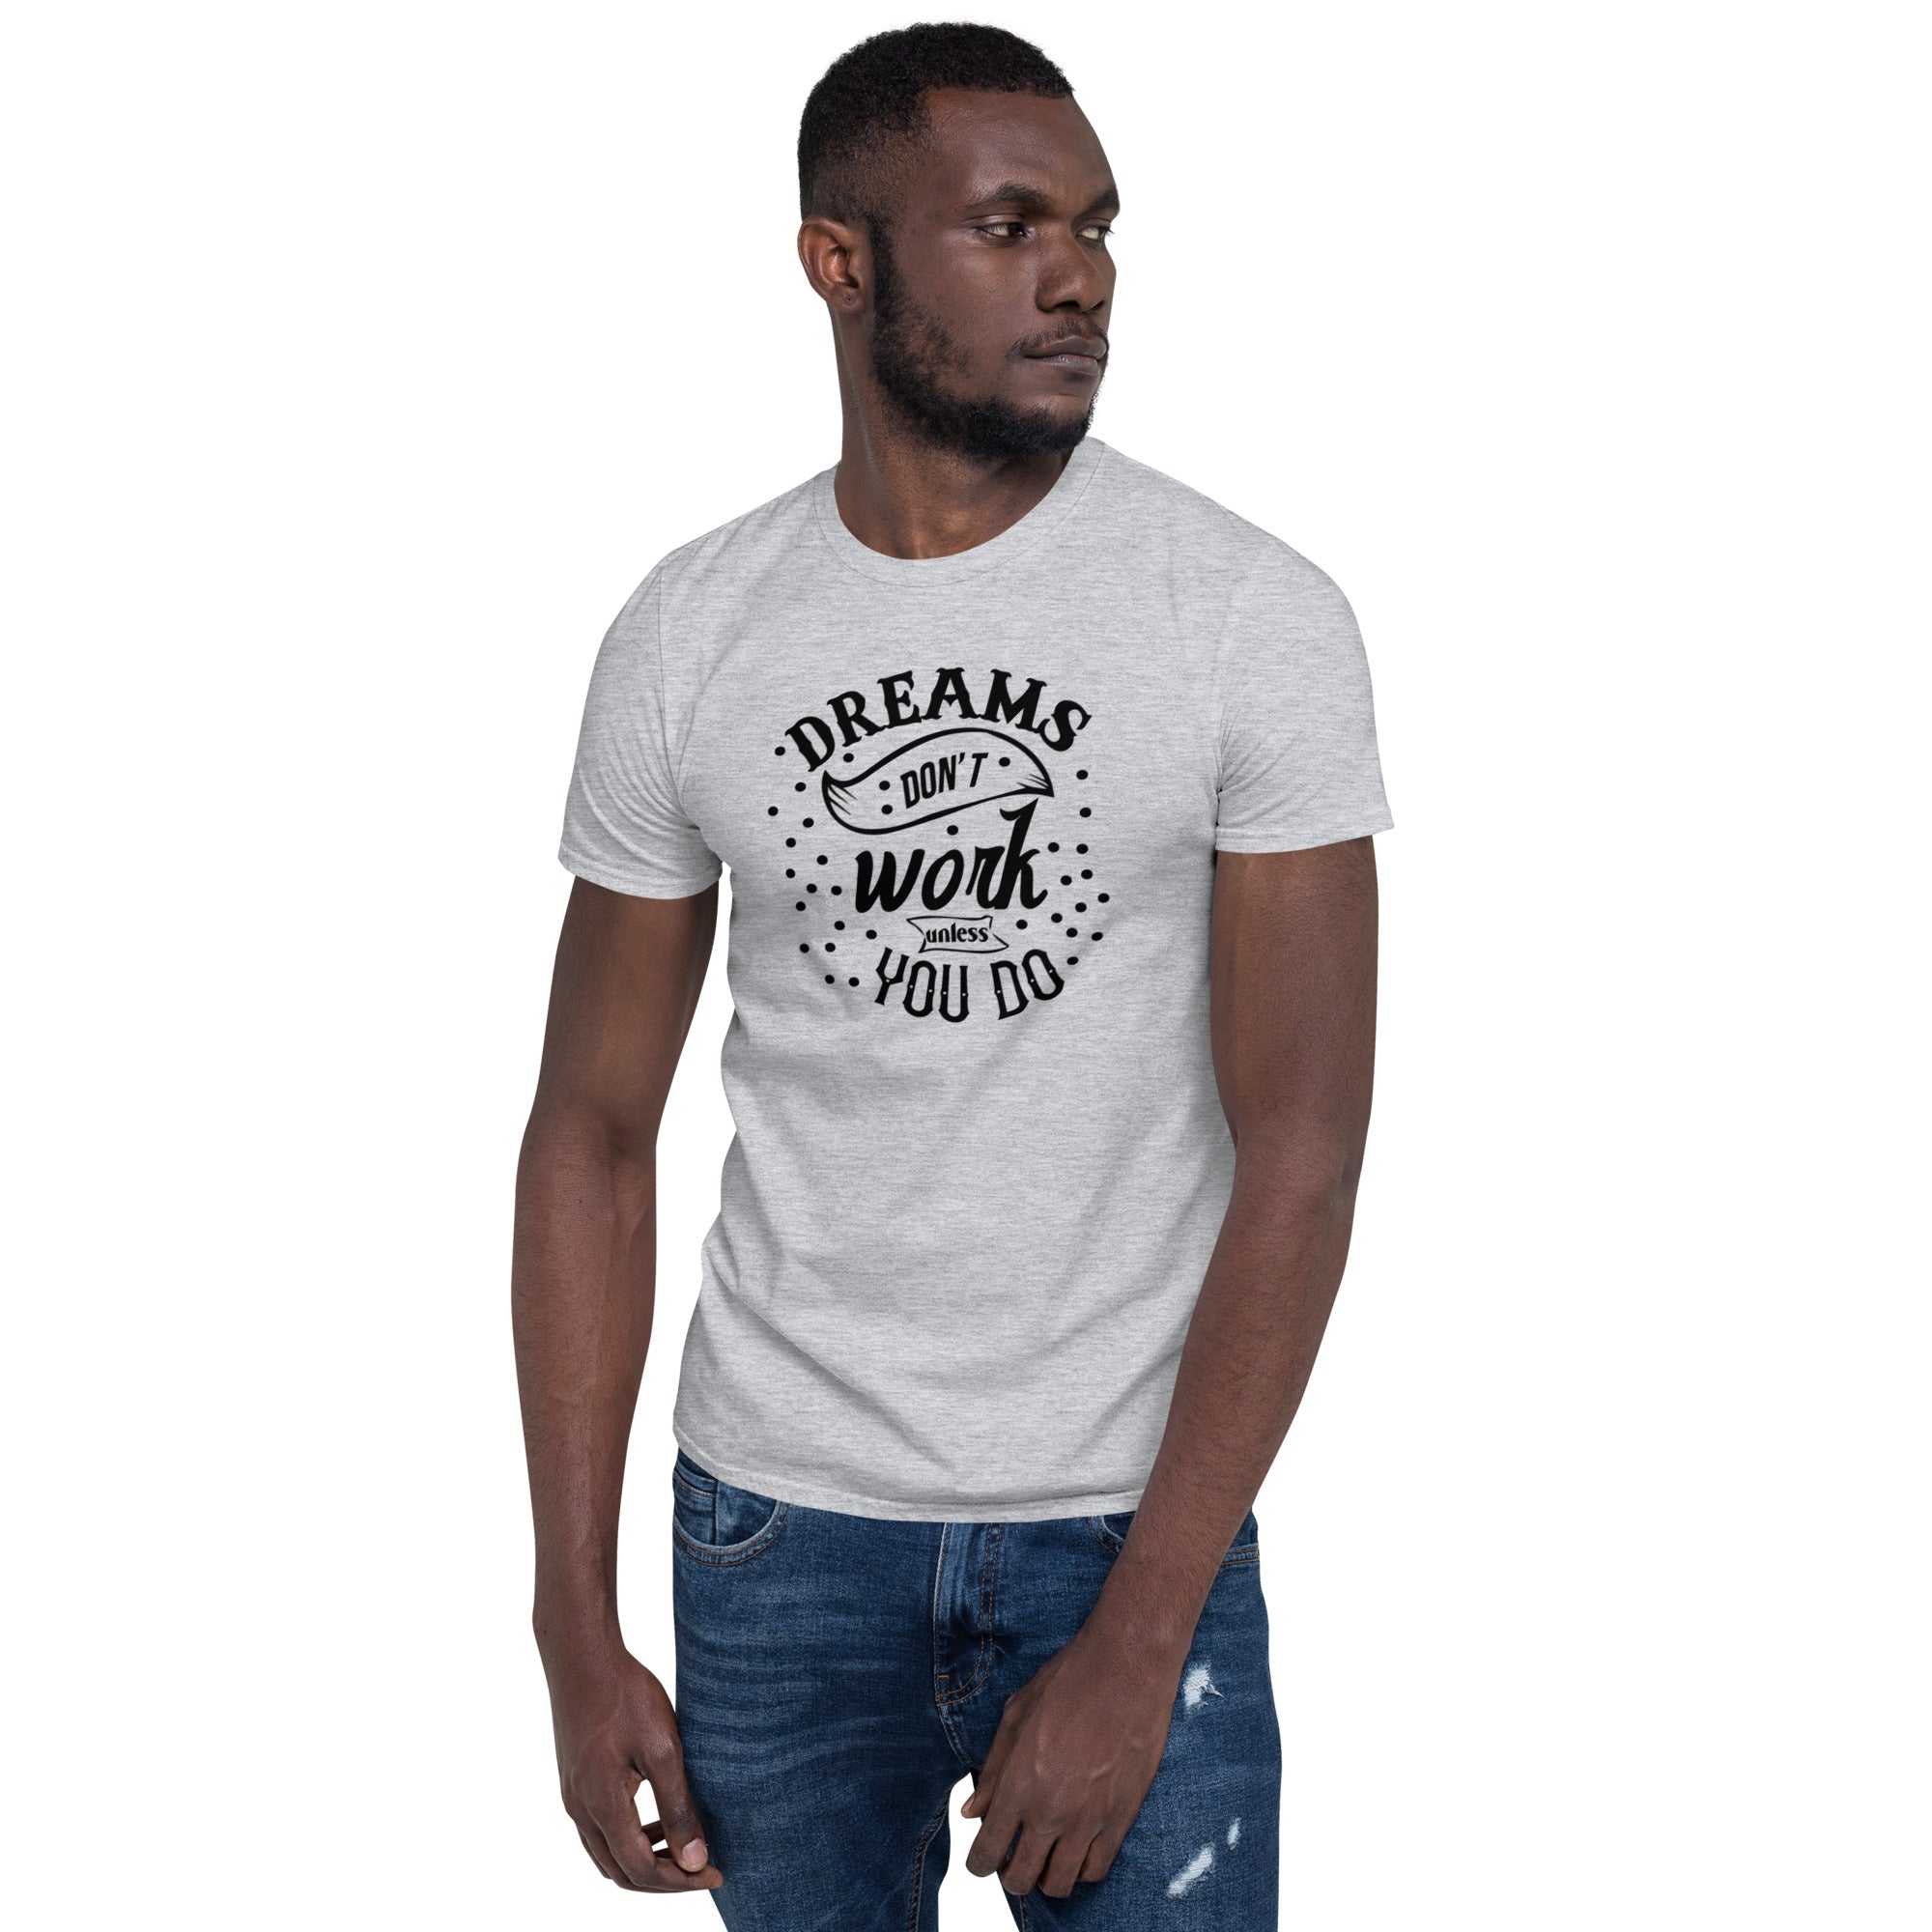 Dreams Don't Work Unless You Do - Short-Sleeve Unisex T-Shirt